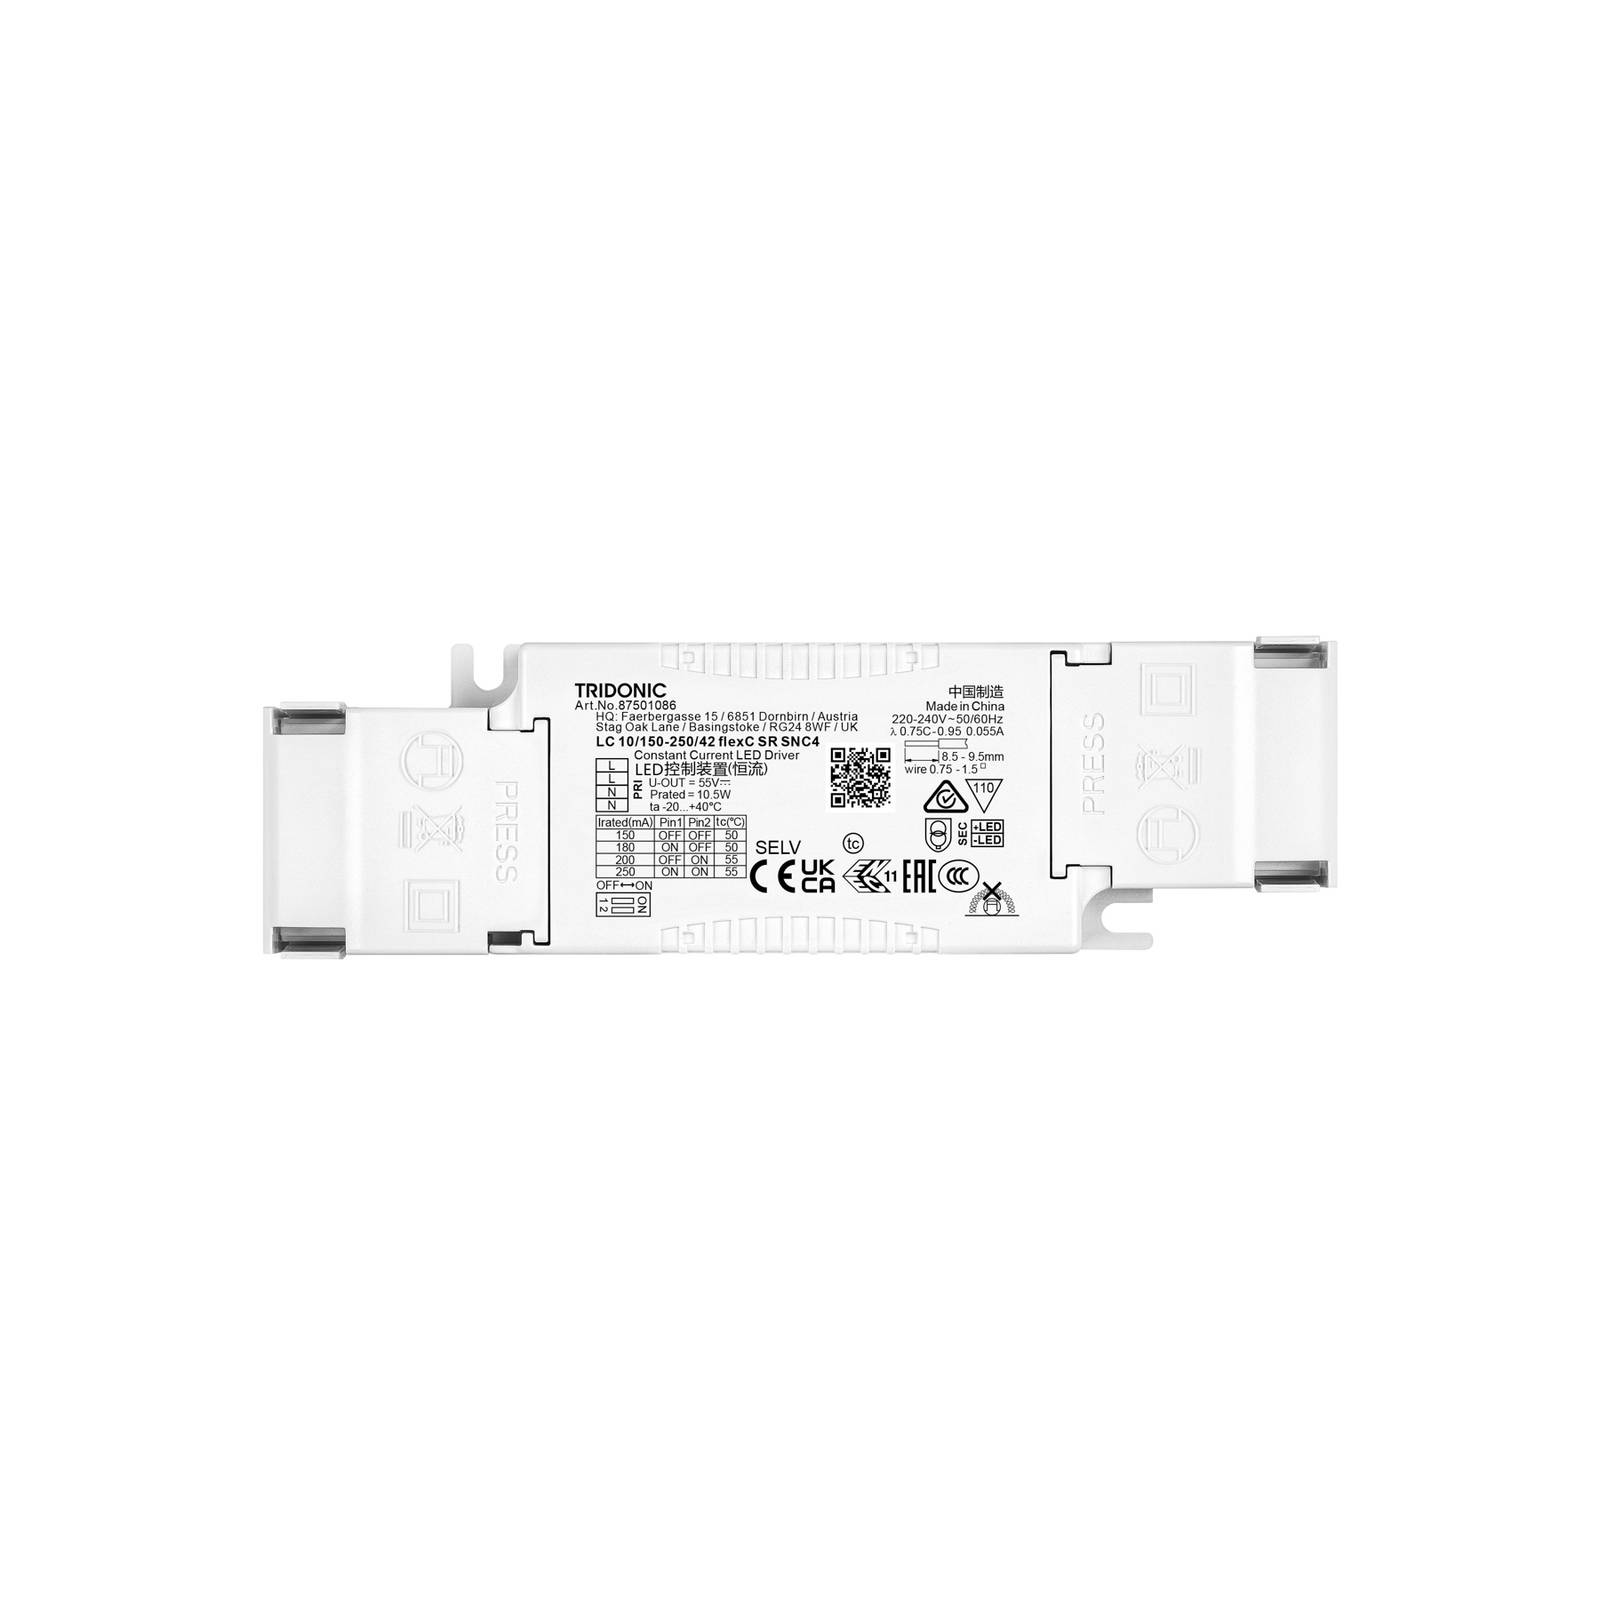 E-shop TRIDONIC LED kompaktný ovládač LC 10/150-250/42 flexC SR SNC4